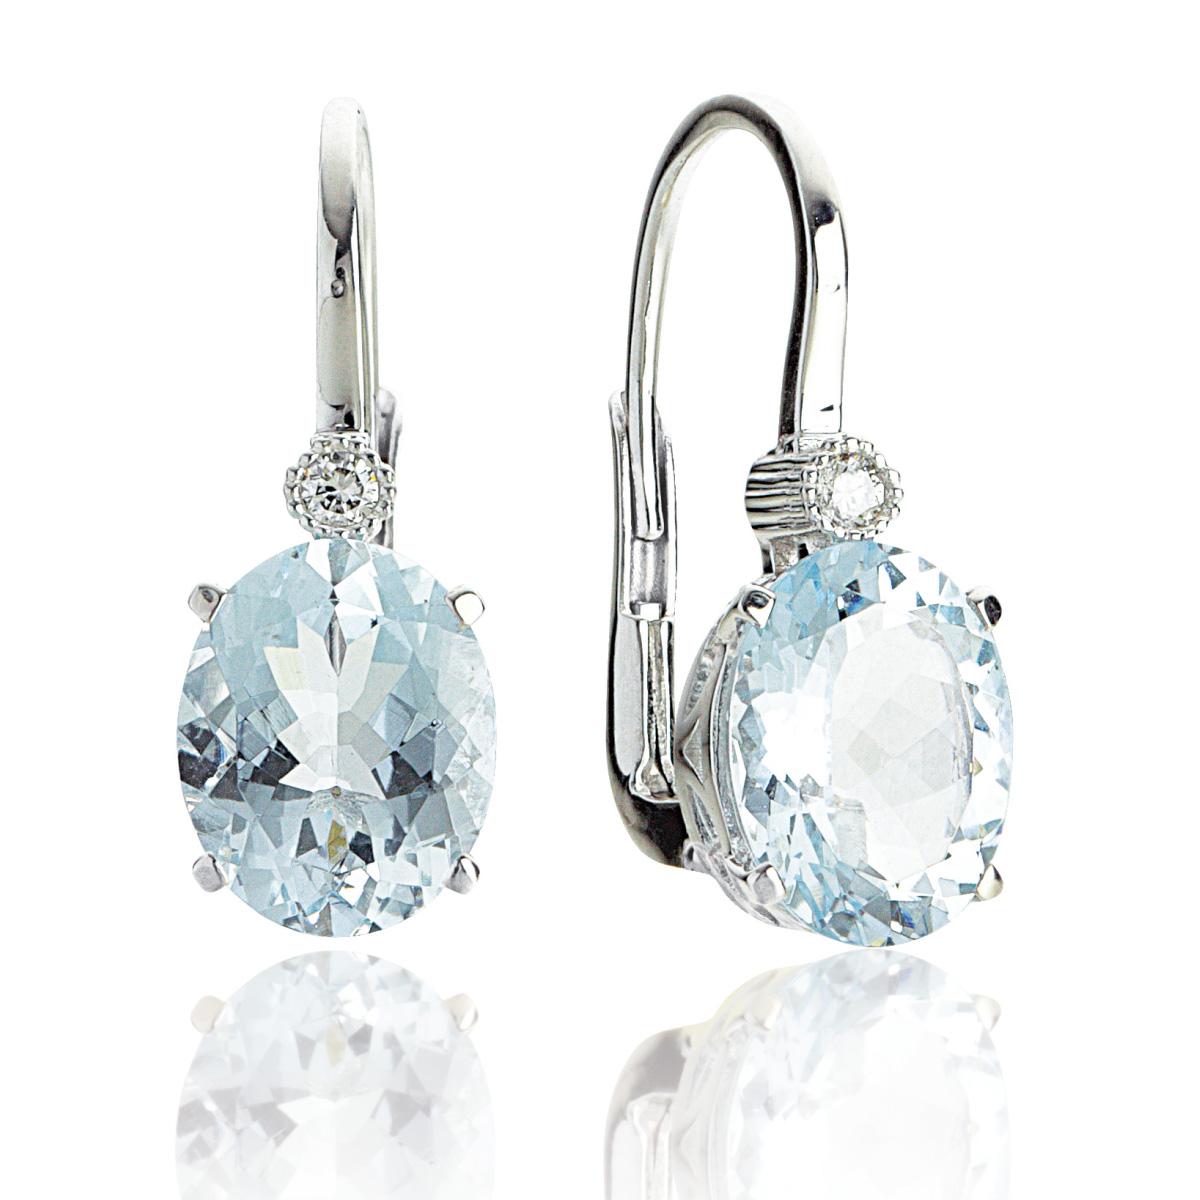 Gold earrings with aquamarine and diamonds - OD363/AC-LB